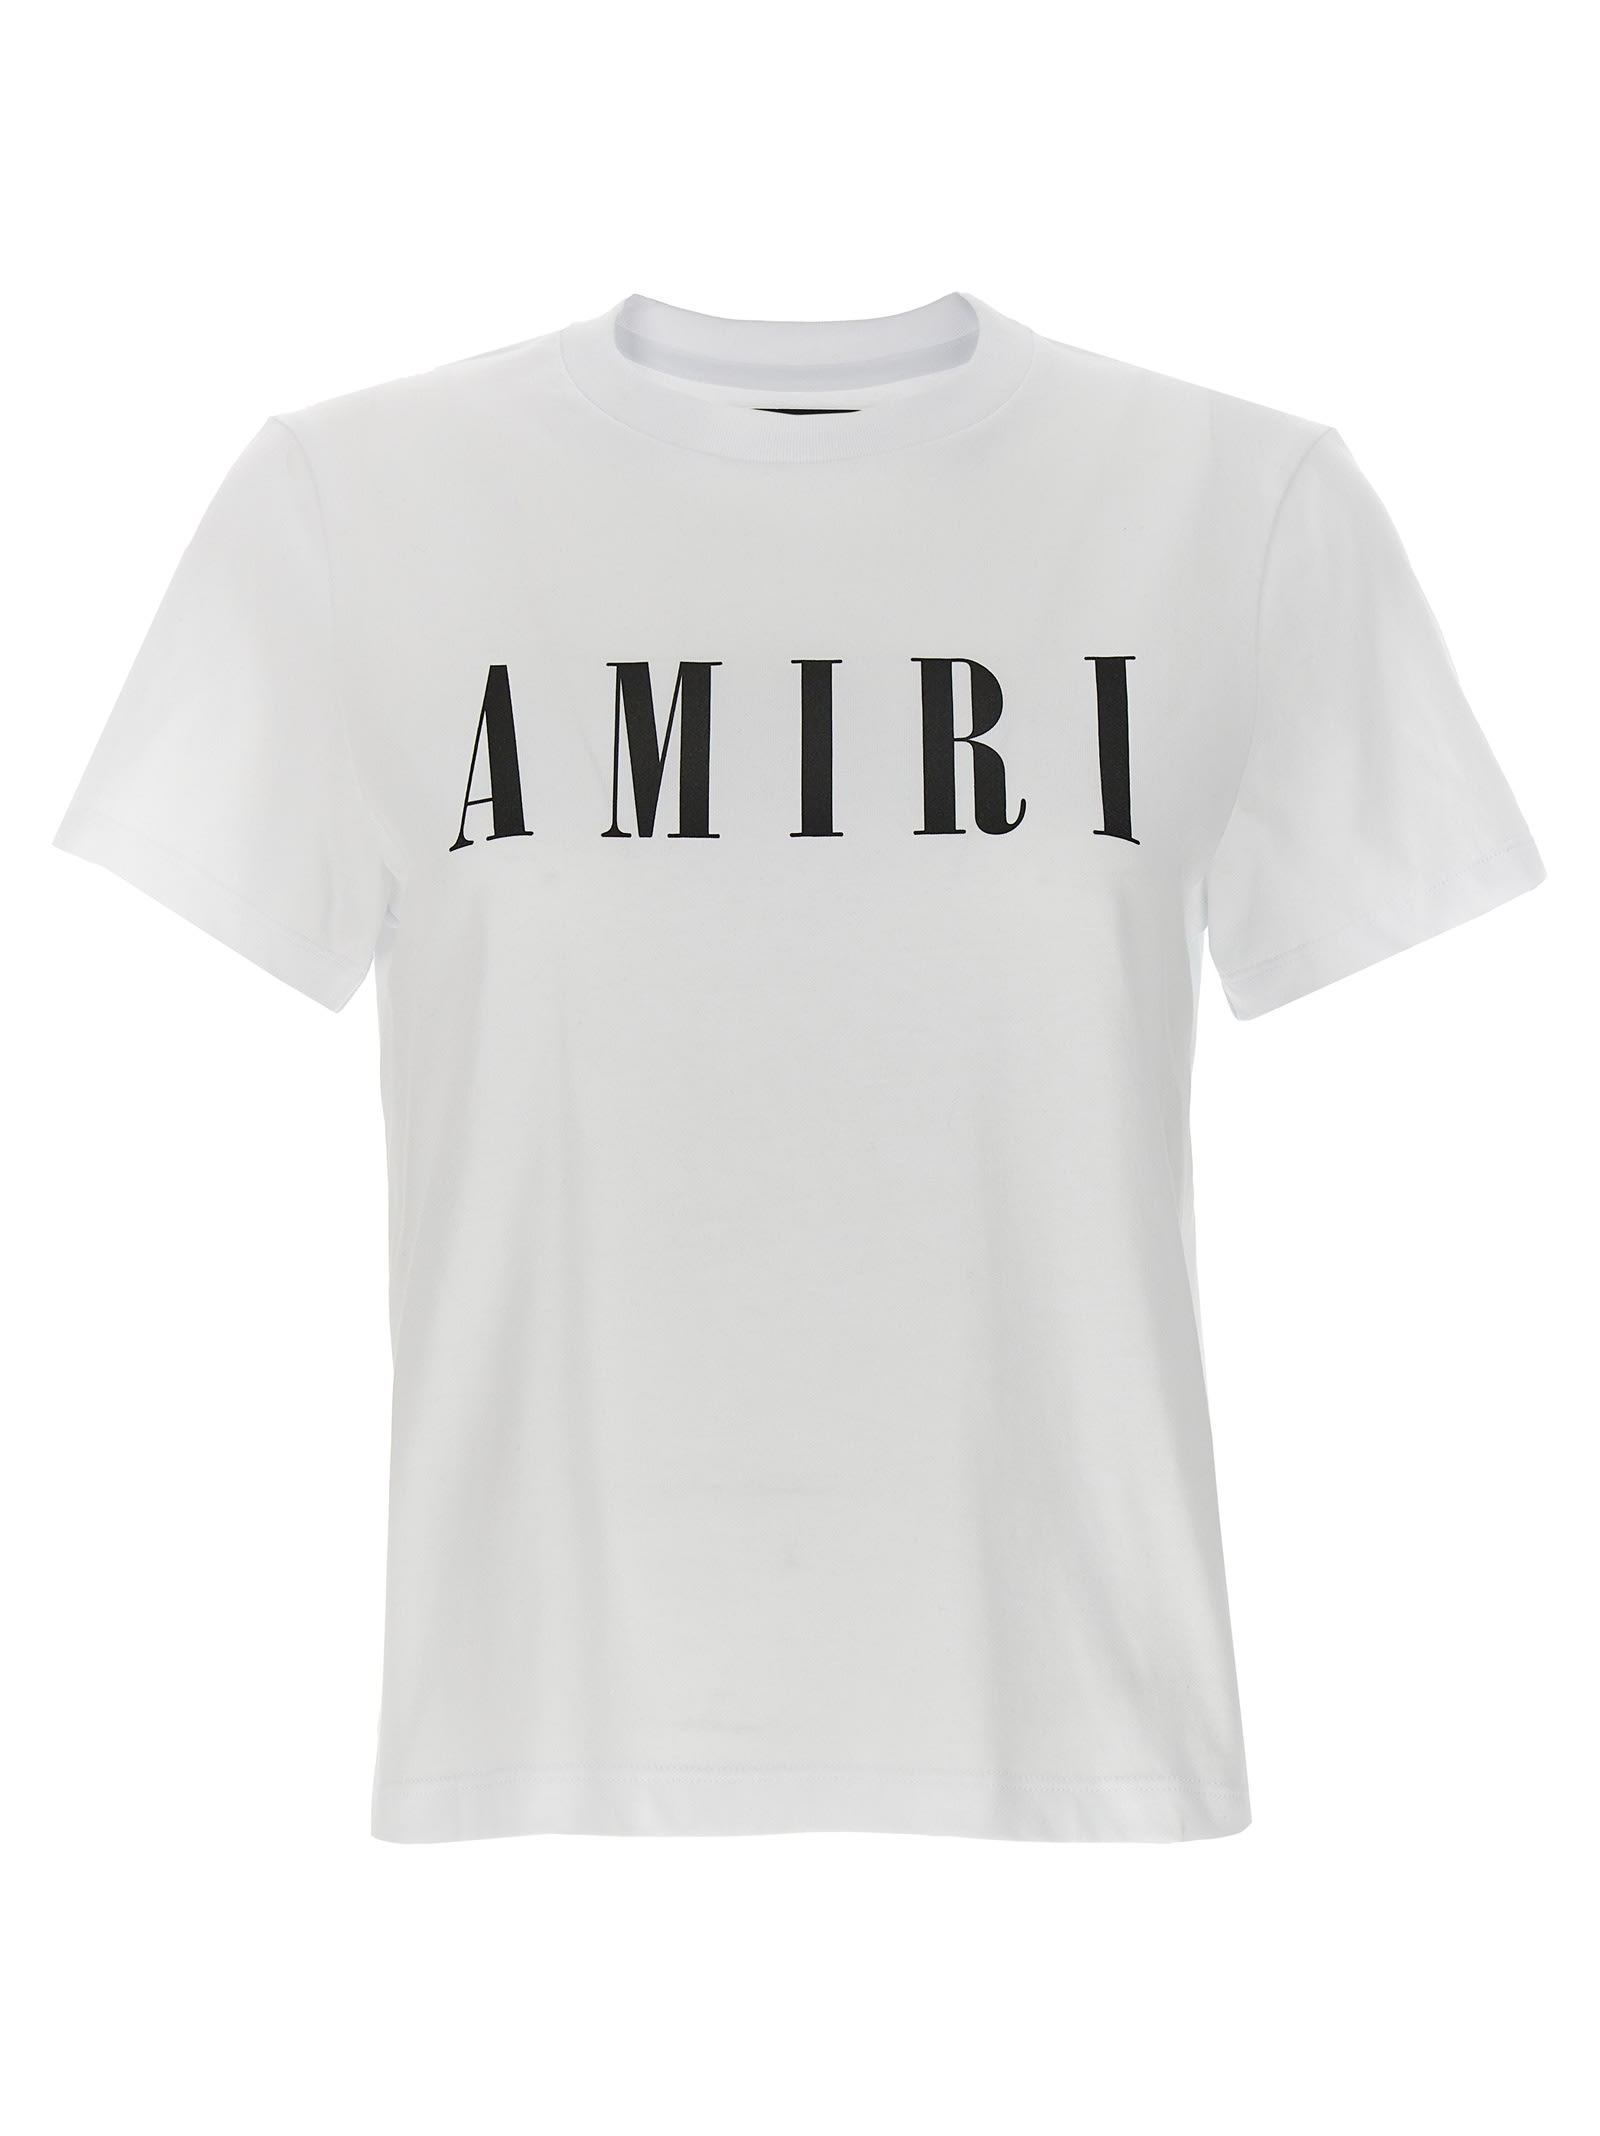 AMIRI AMIRI CORE T-SHIRT